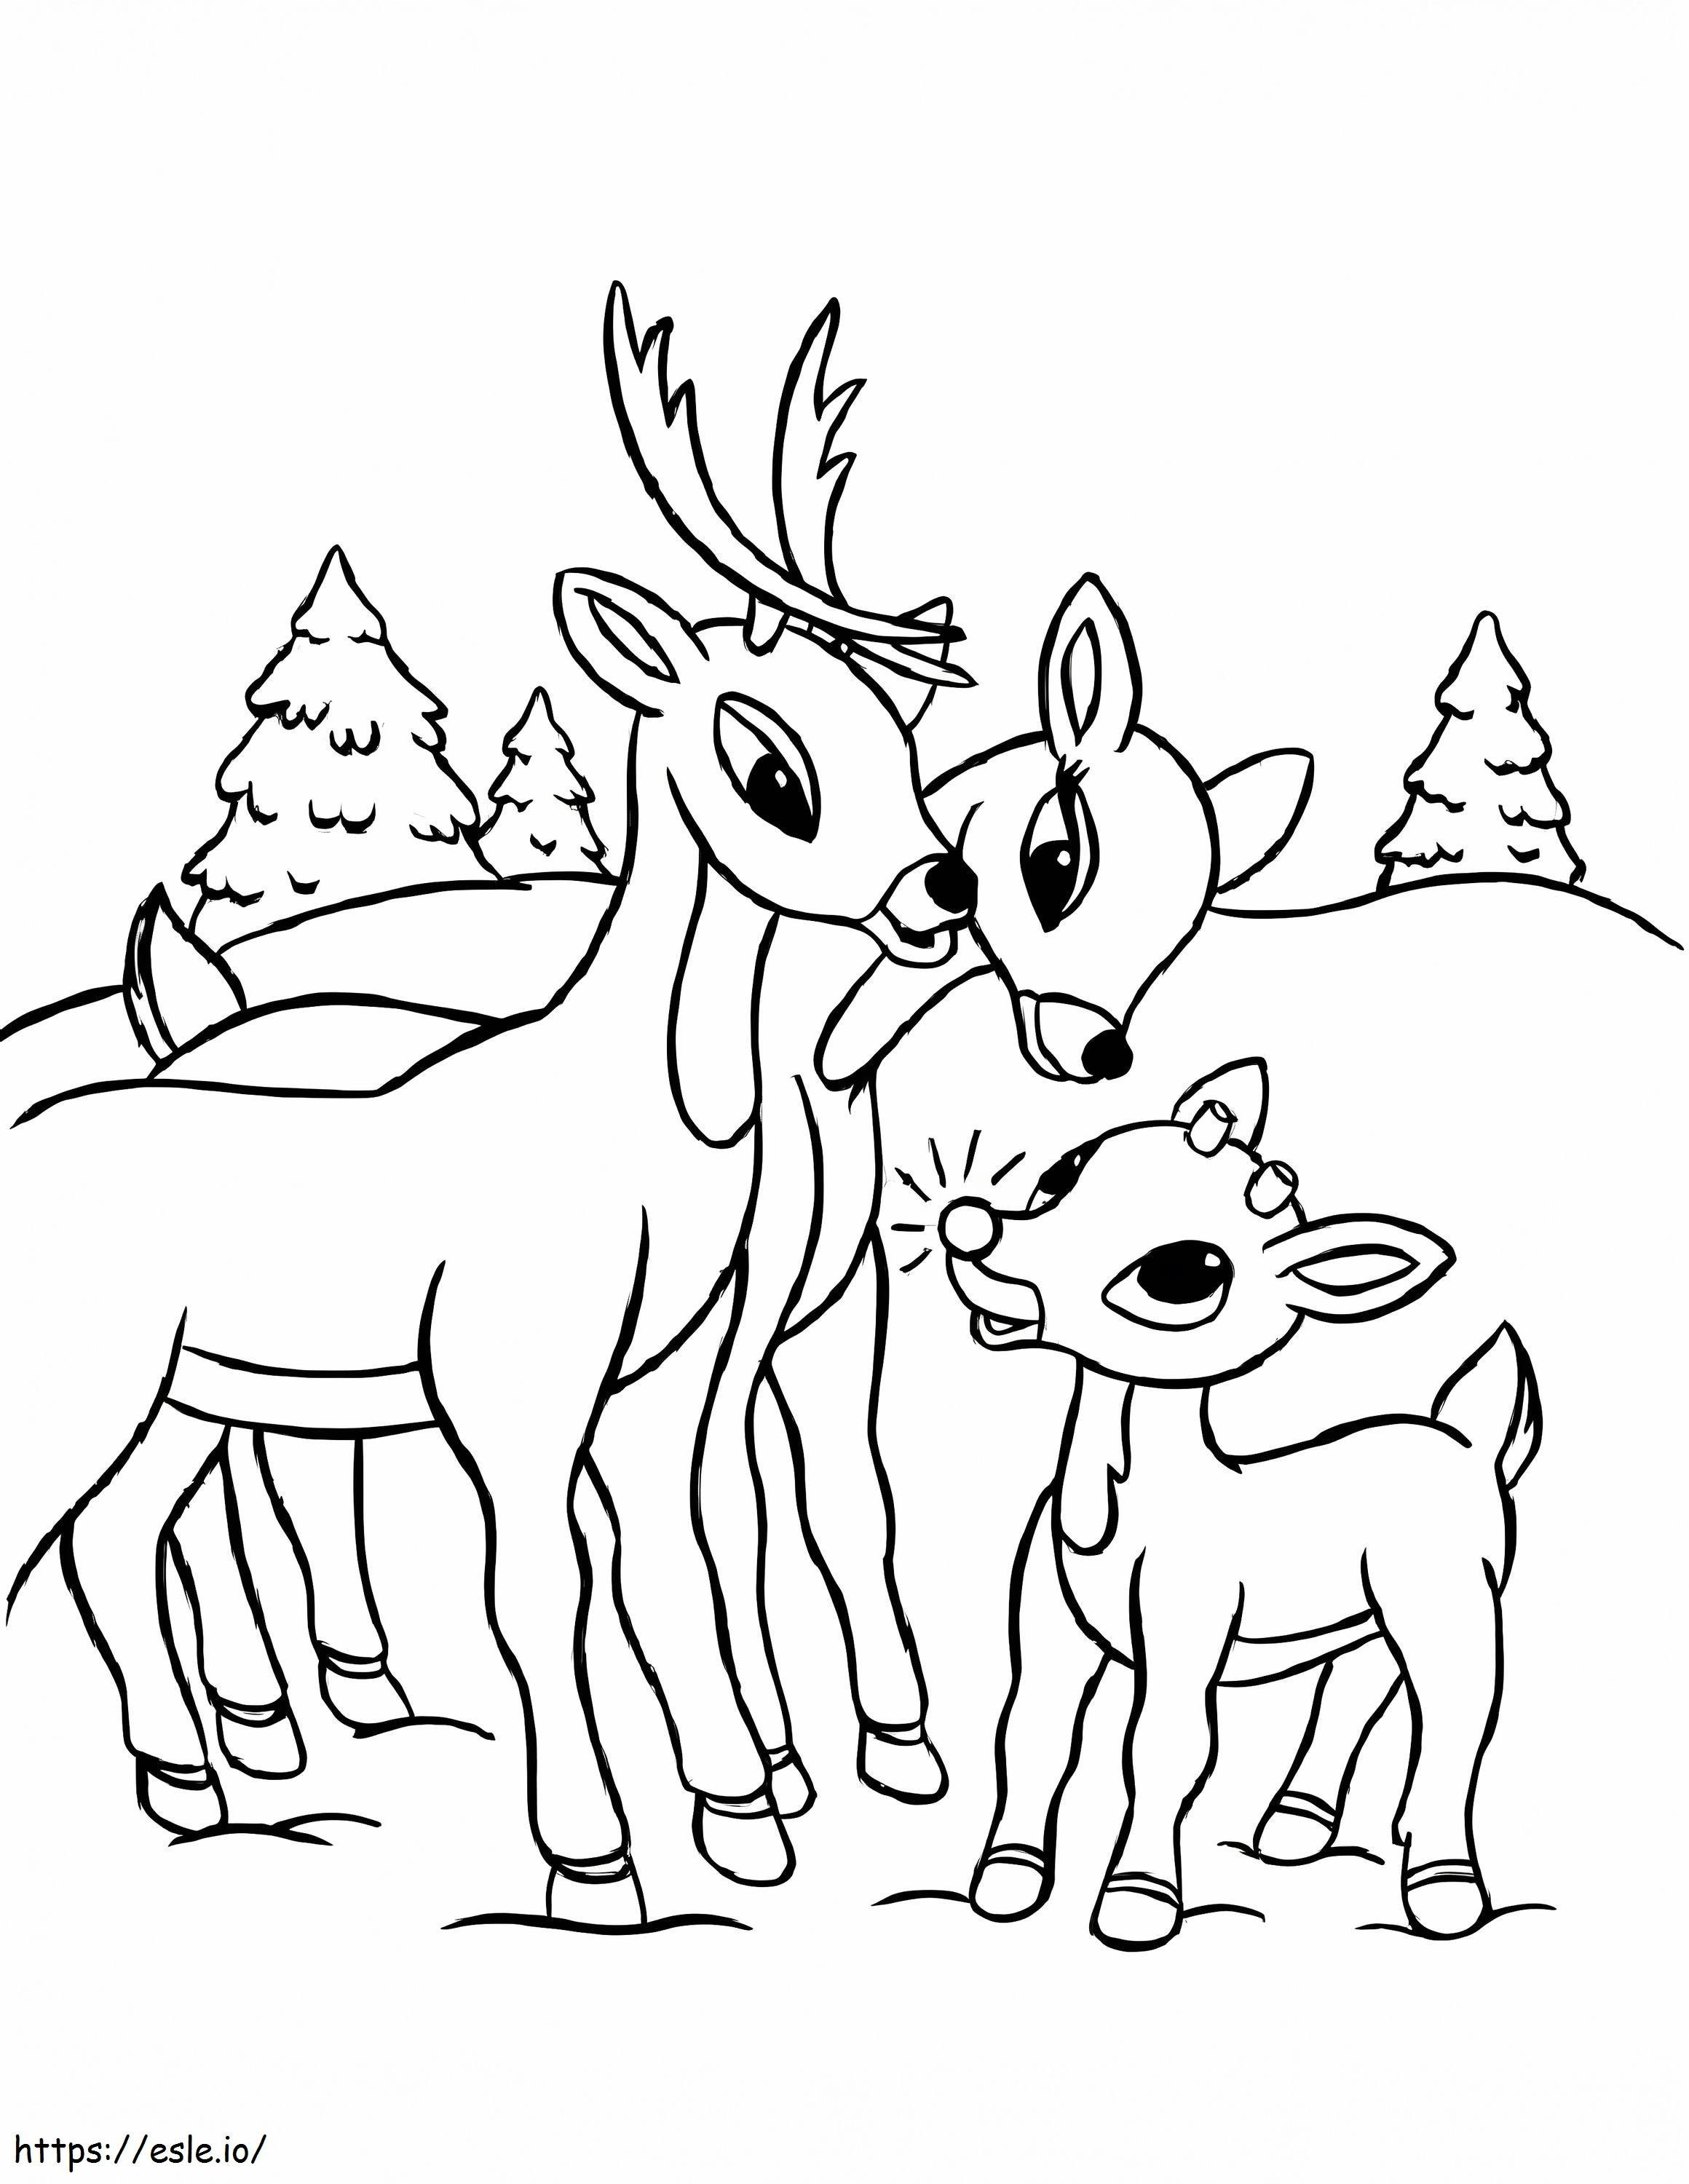 Familie Rudolph ausmalbilder